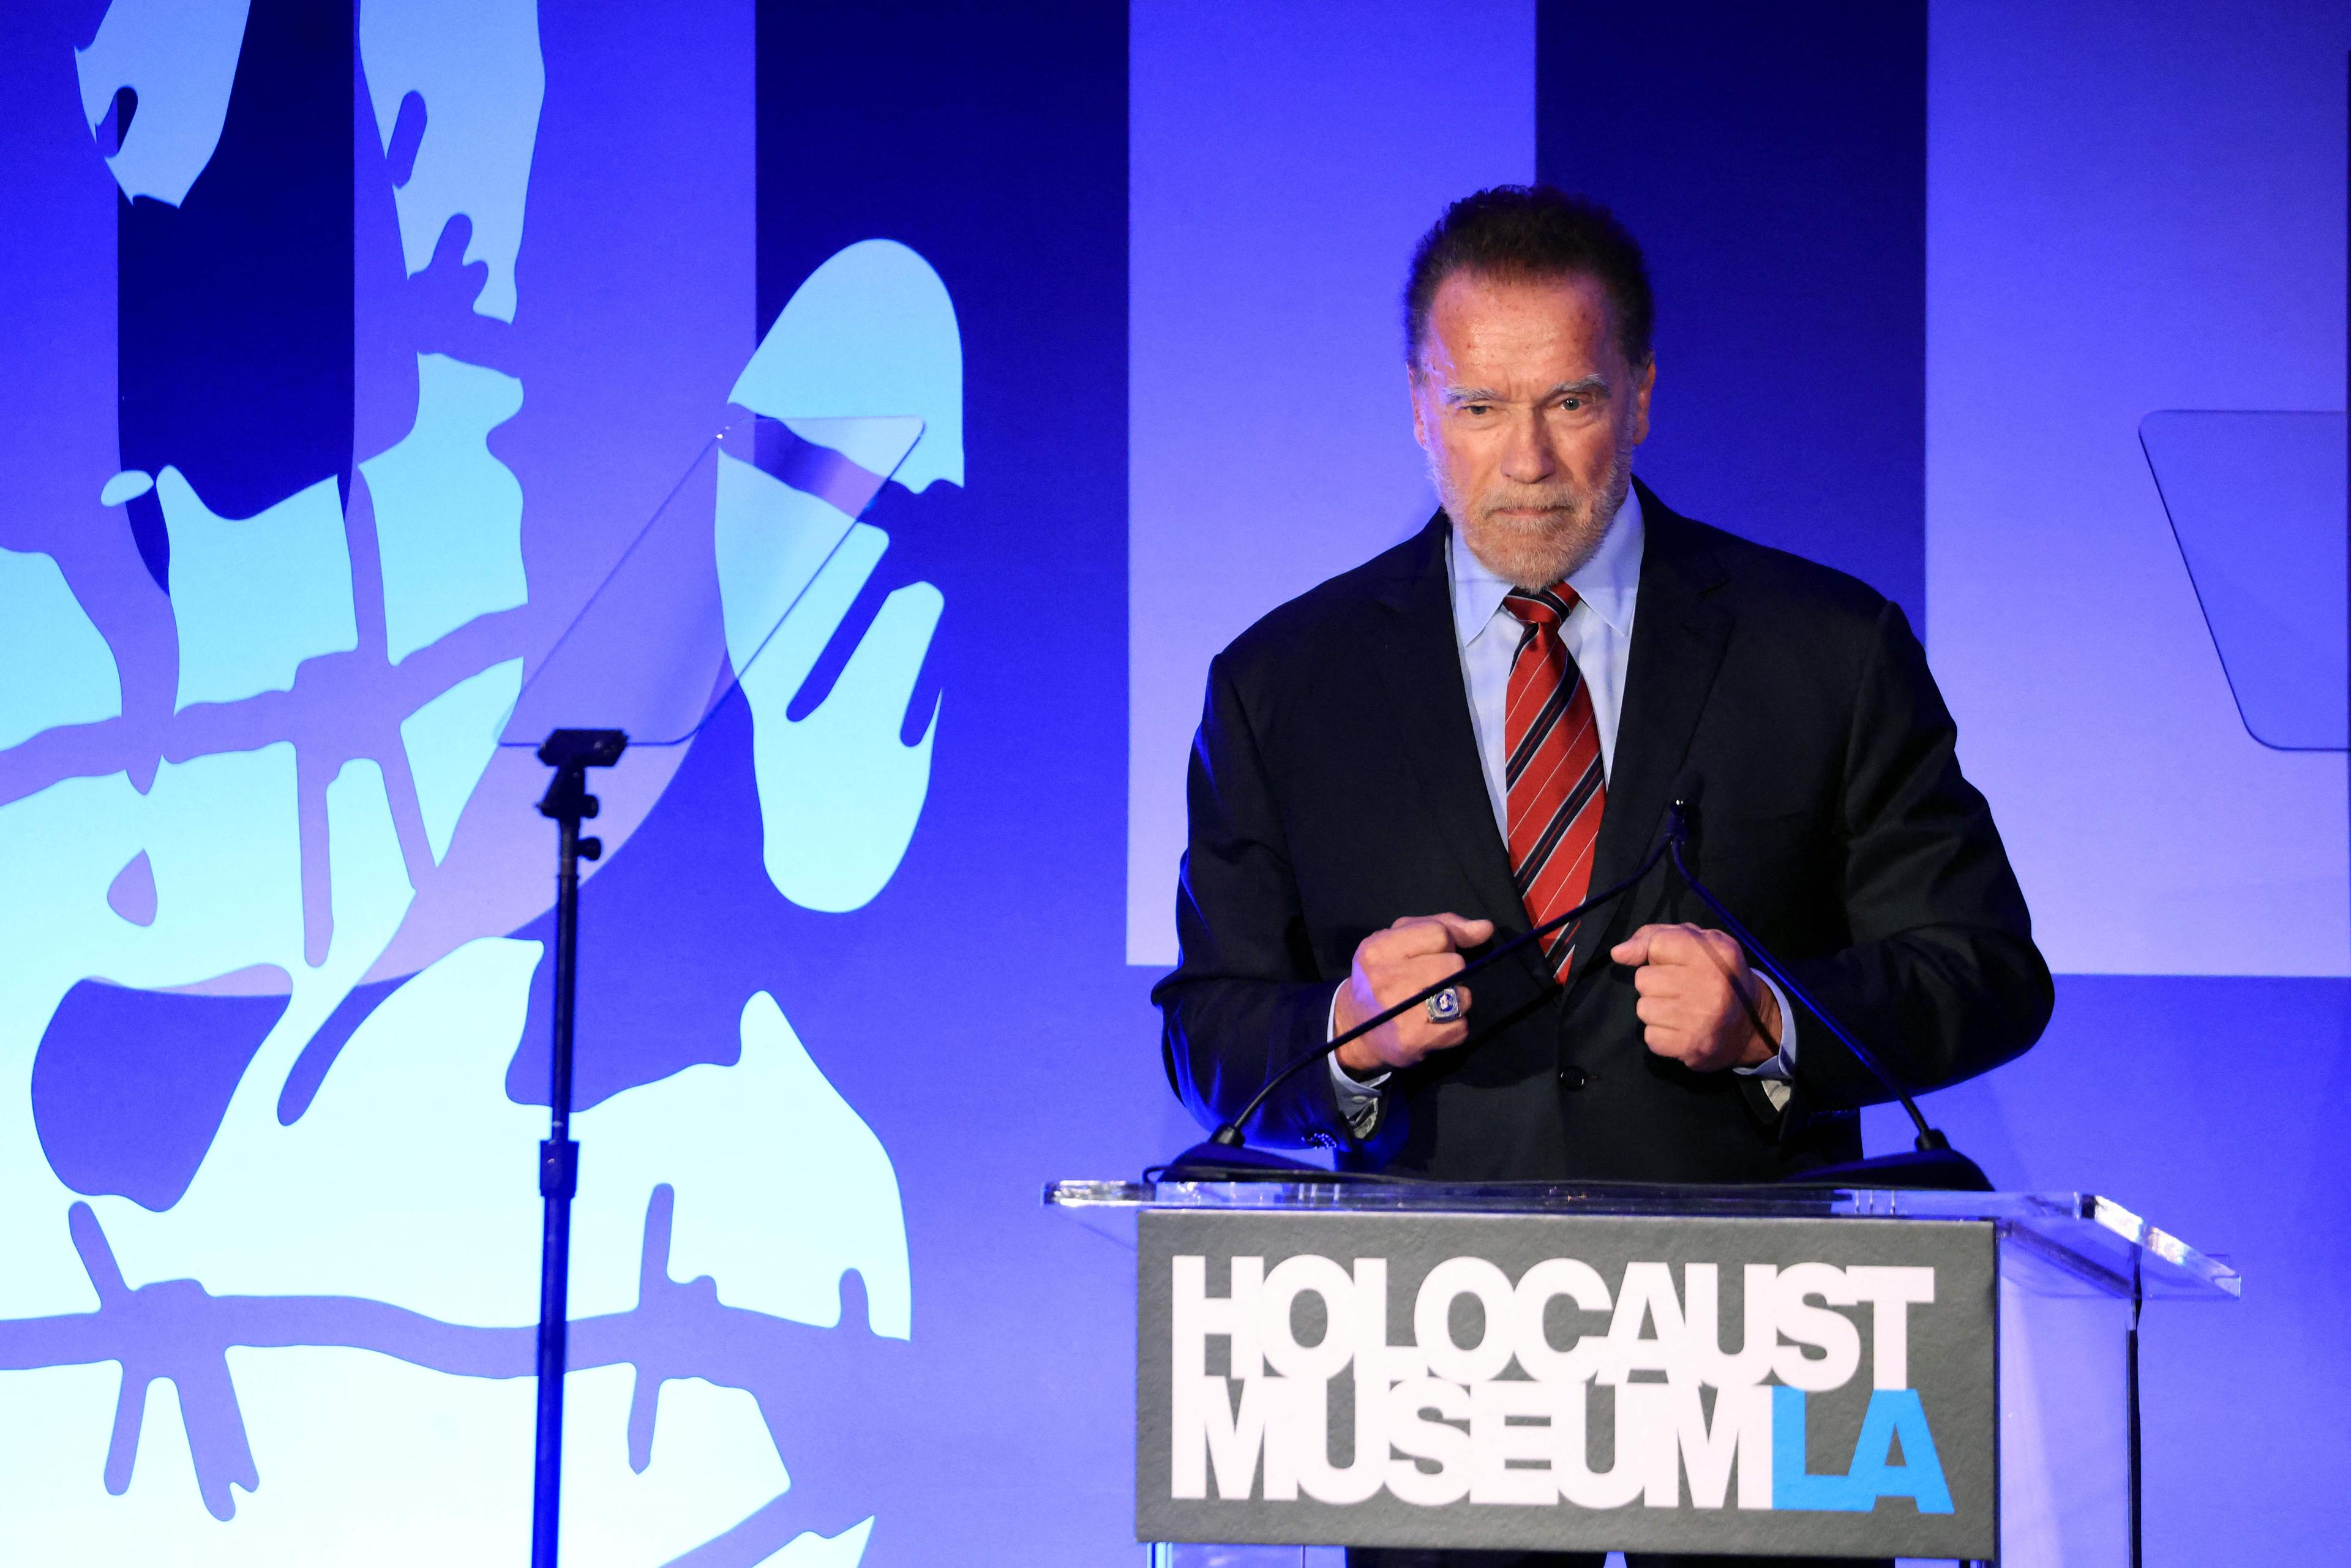 Schwarzenegger Receives Courage Award From Holocaust Museum LA Amid Rising Antisemitism